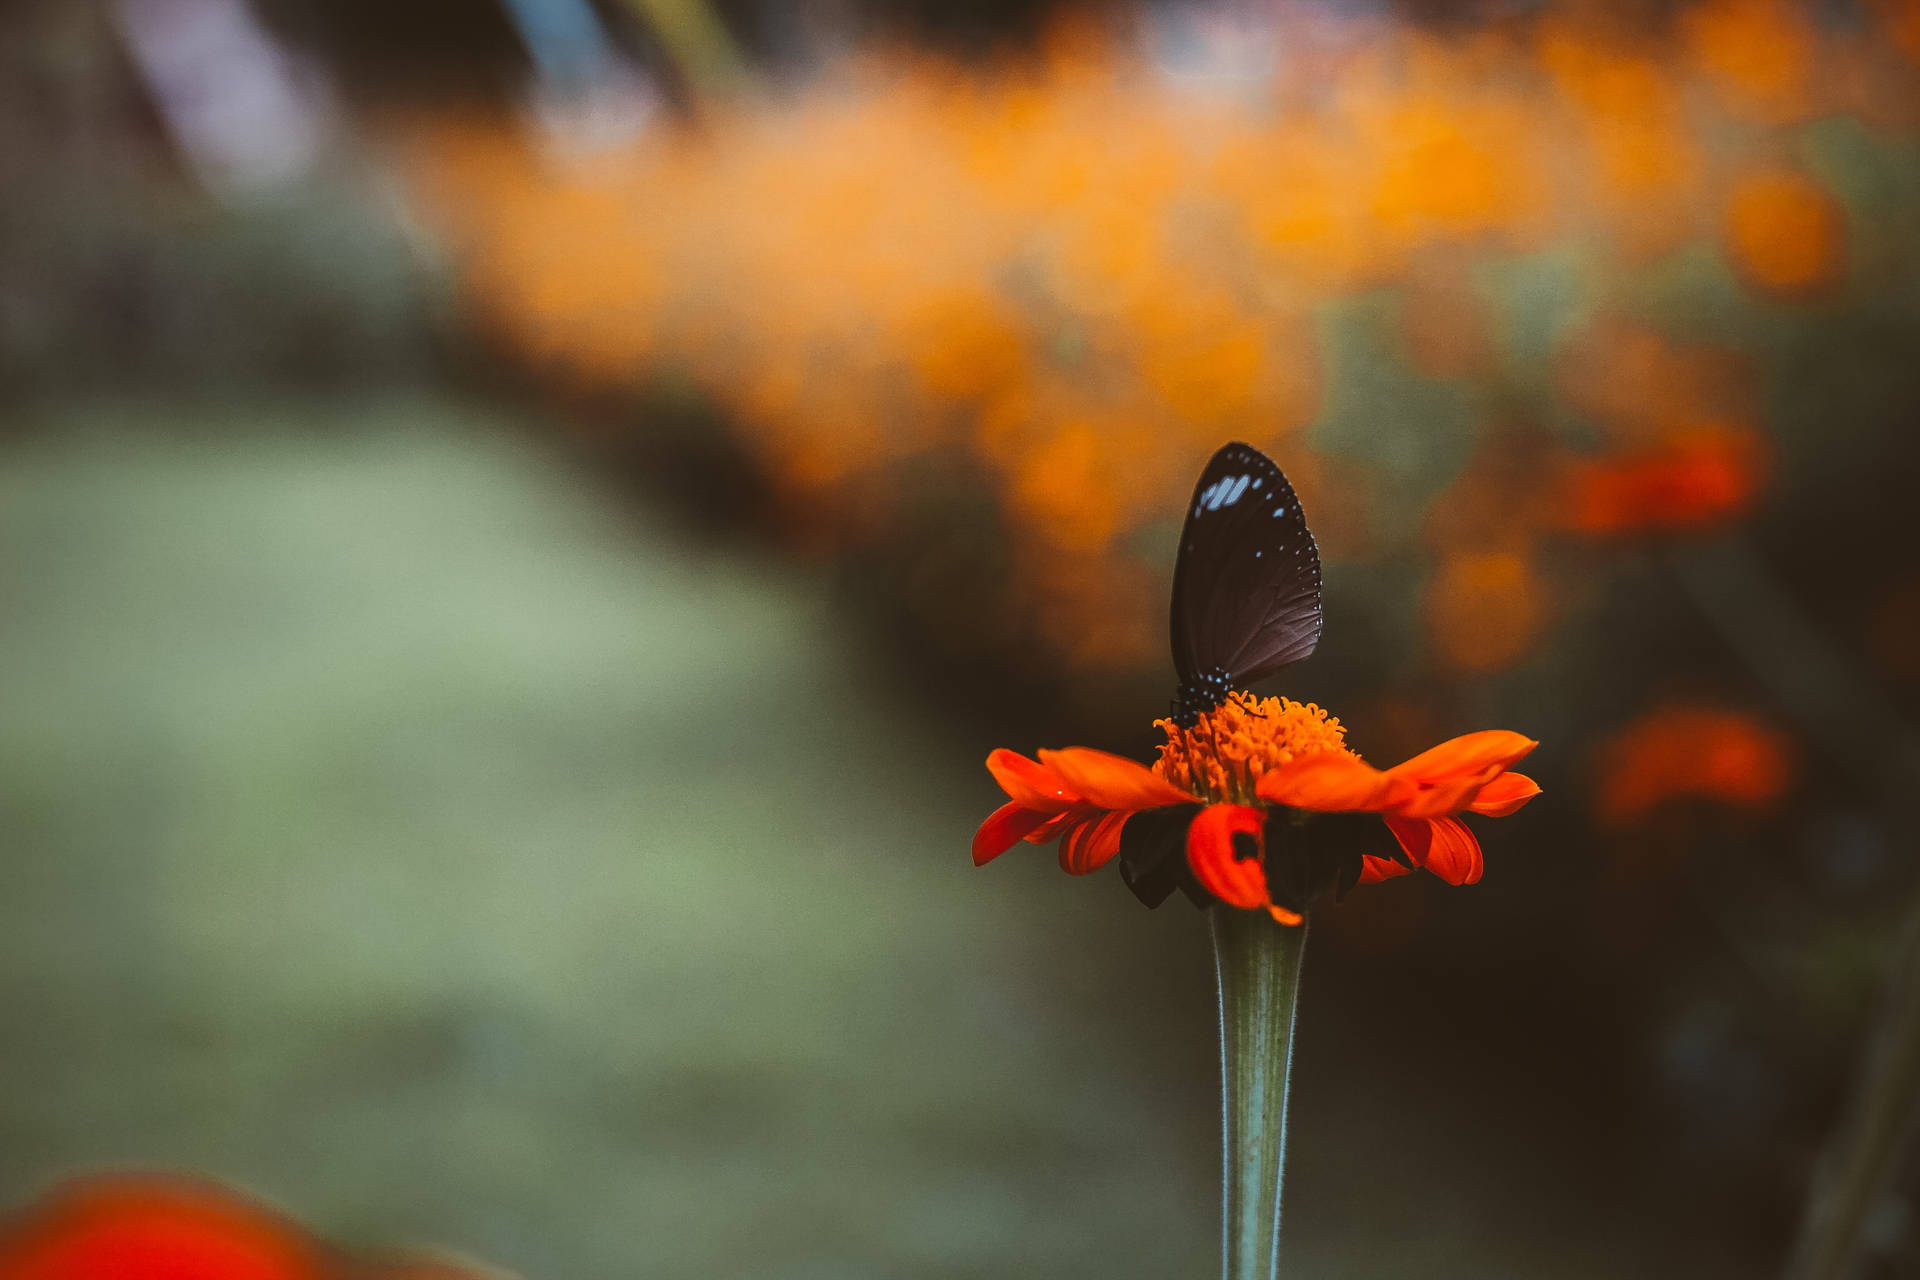 The beauty of a black butterfly resting on an orange flower Wallpaper